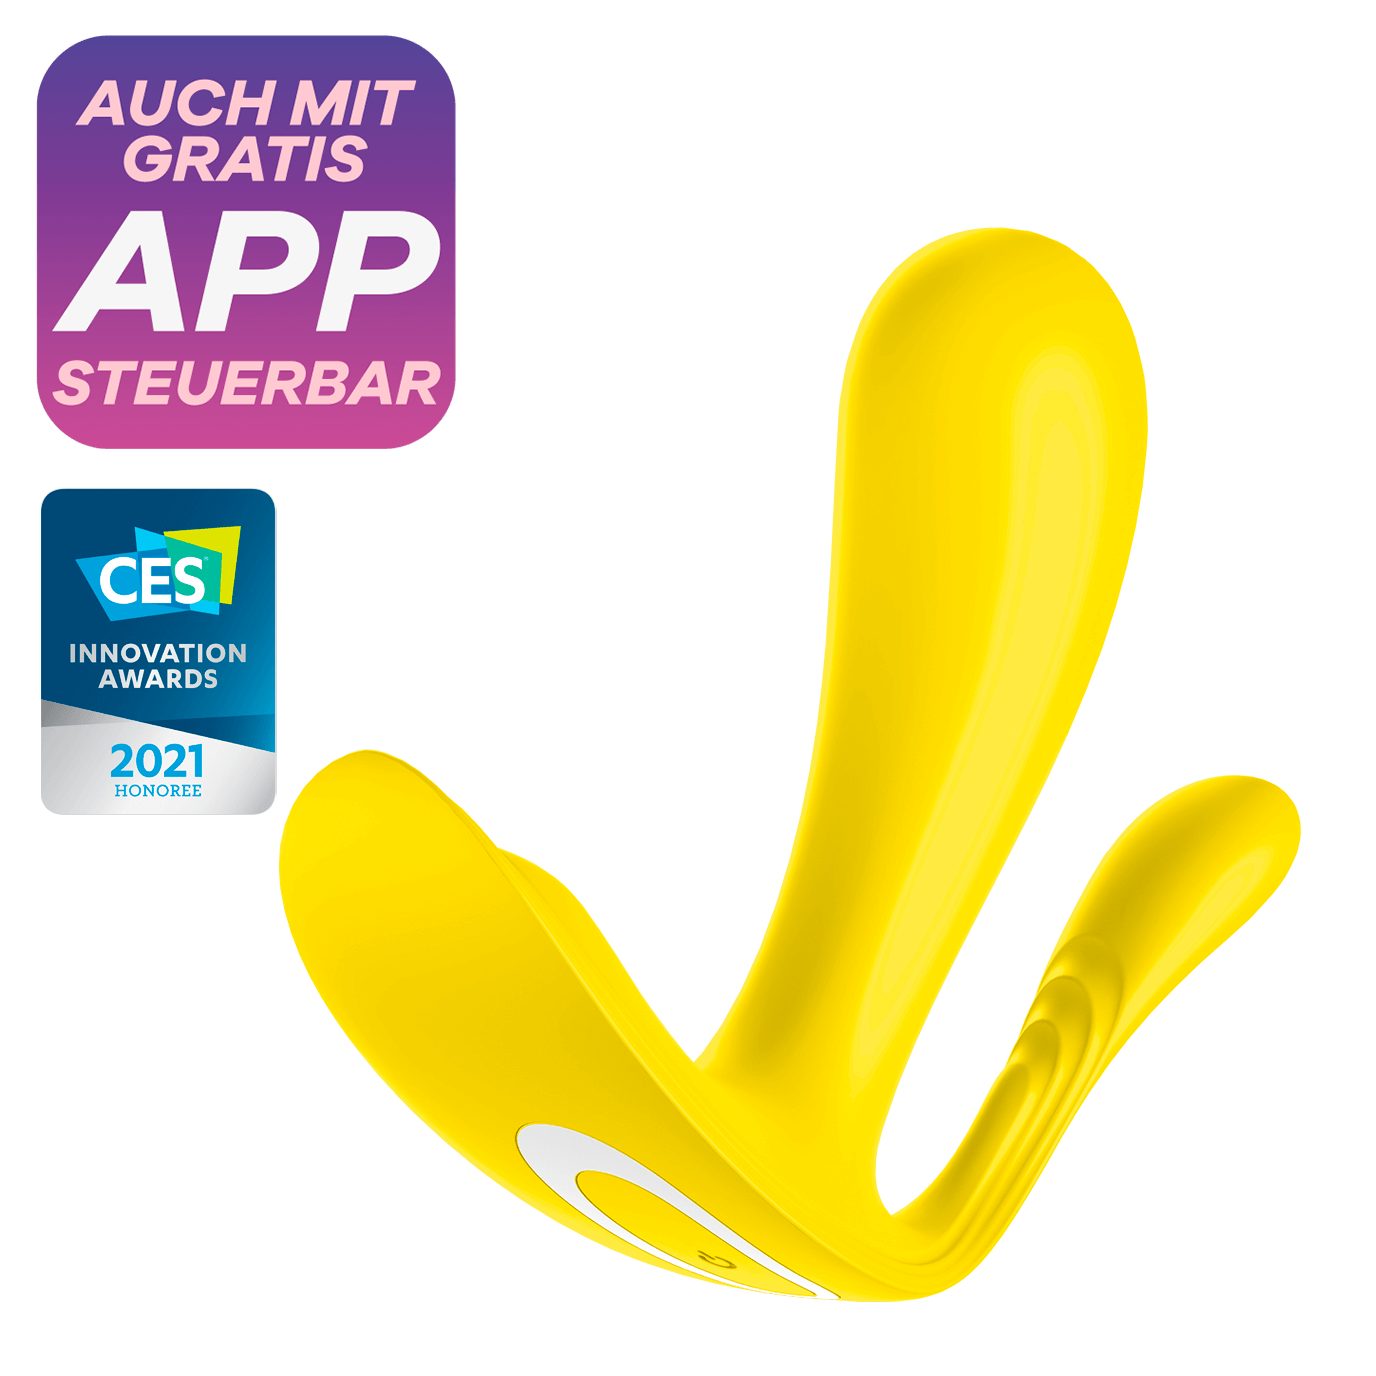 APP 11cm, Satisfyer Klitoris-Stimulator Vibrator, Bluetooth 'Top Secret+ Satisfyer Connect gelb App', mit